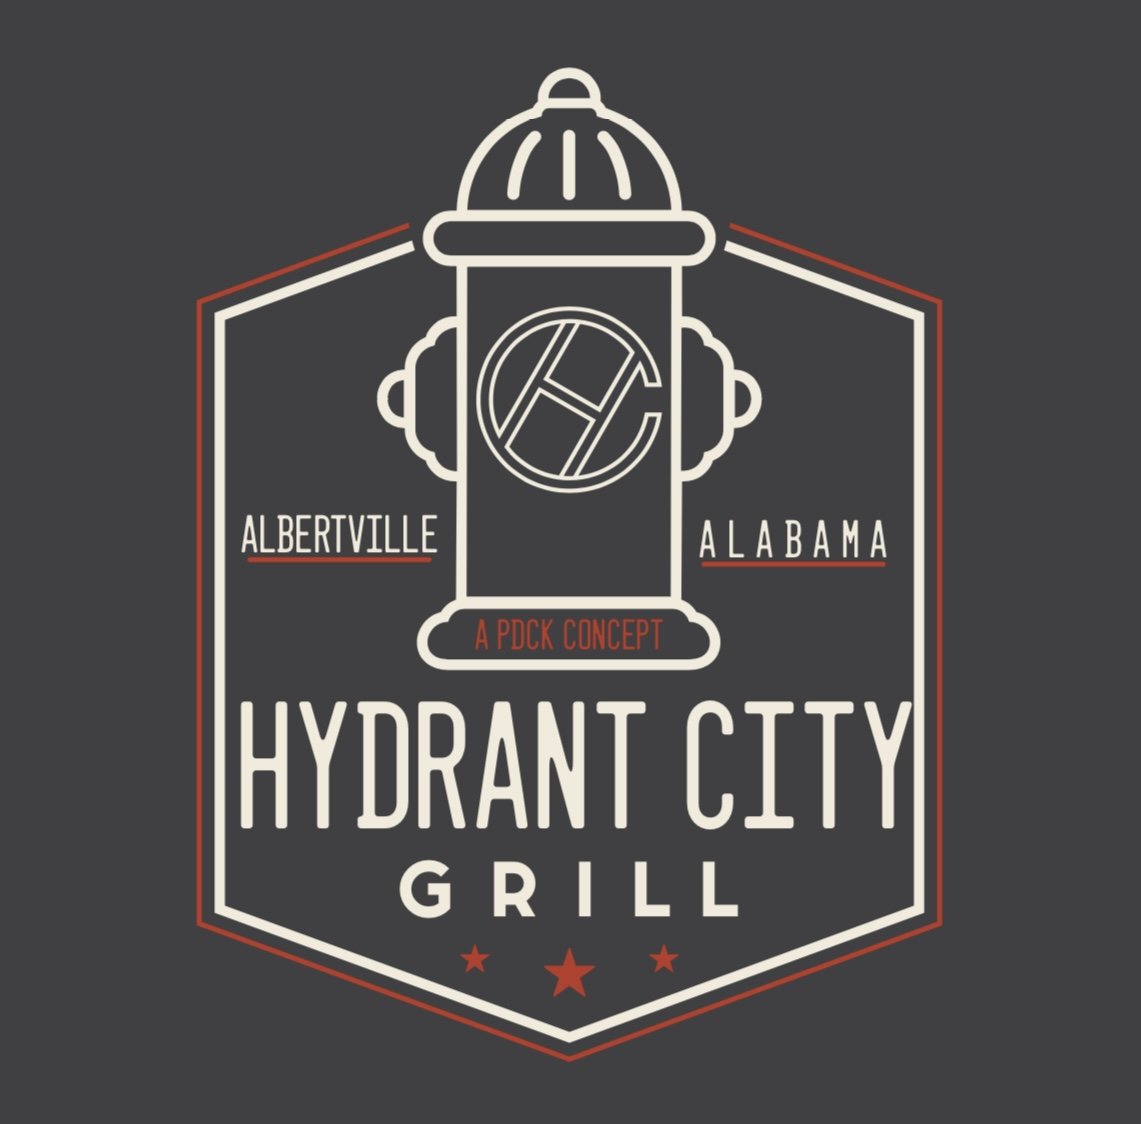 Hydrant City Grill